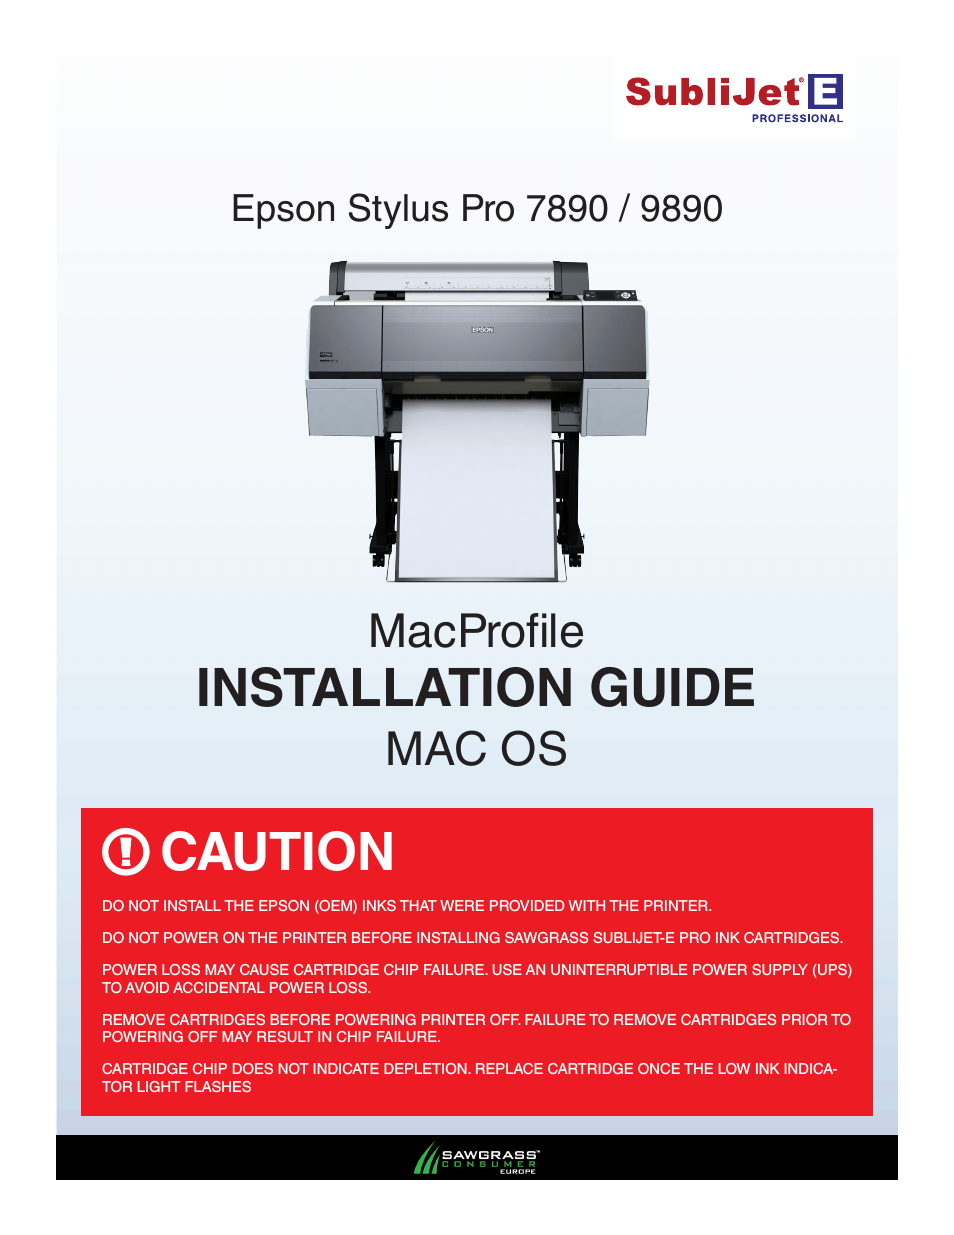 SubliJet E Epson Stylus Pro 9890 (Mac ICC Profile Setup): Printer/Profile Installation Guide